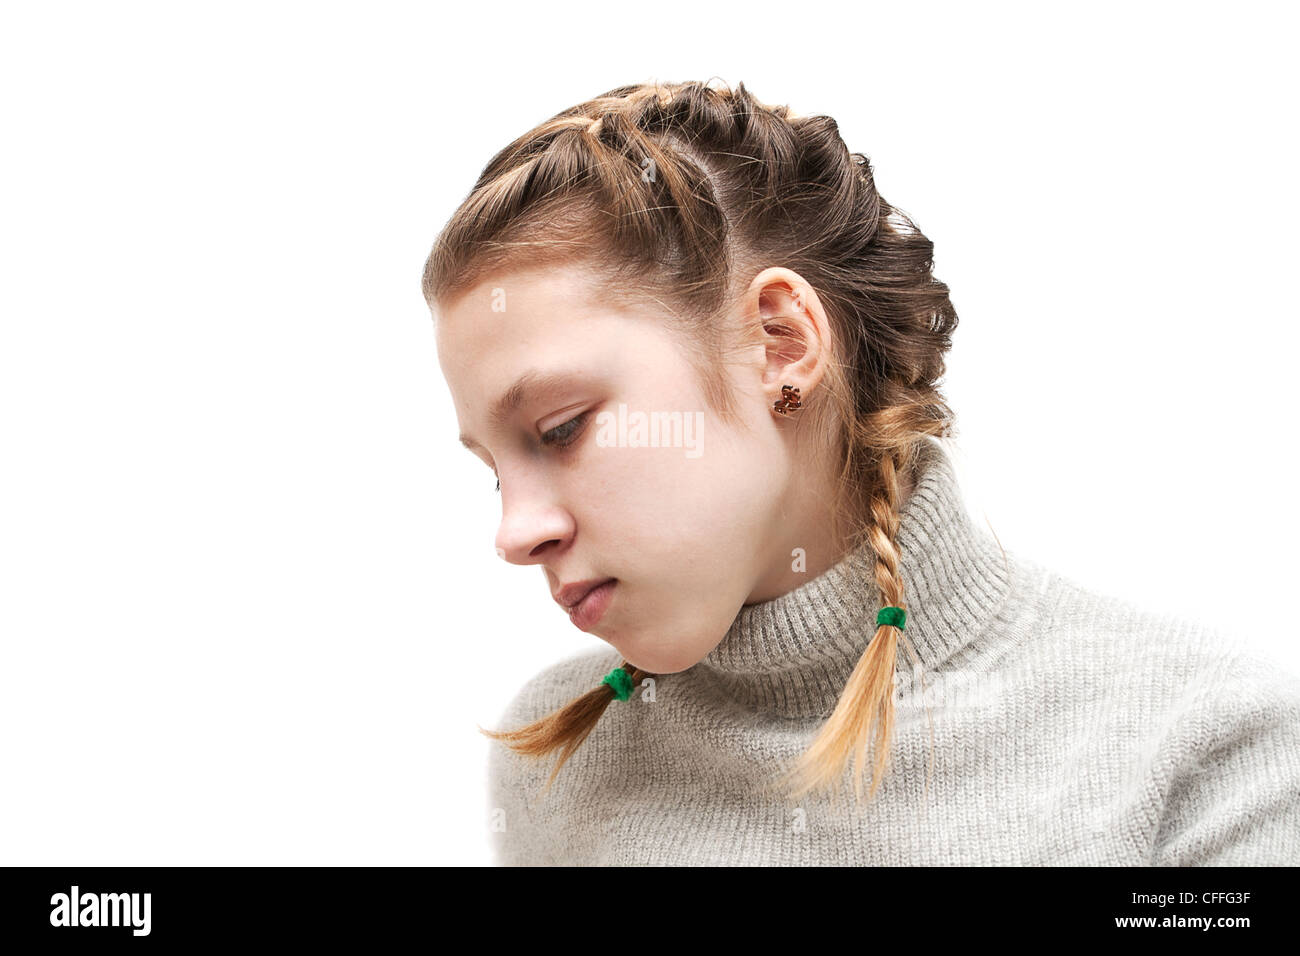 Portrait of a sad  girl with hair like 'Dragon' Stock Photo